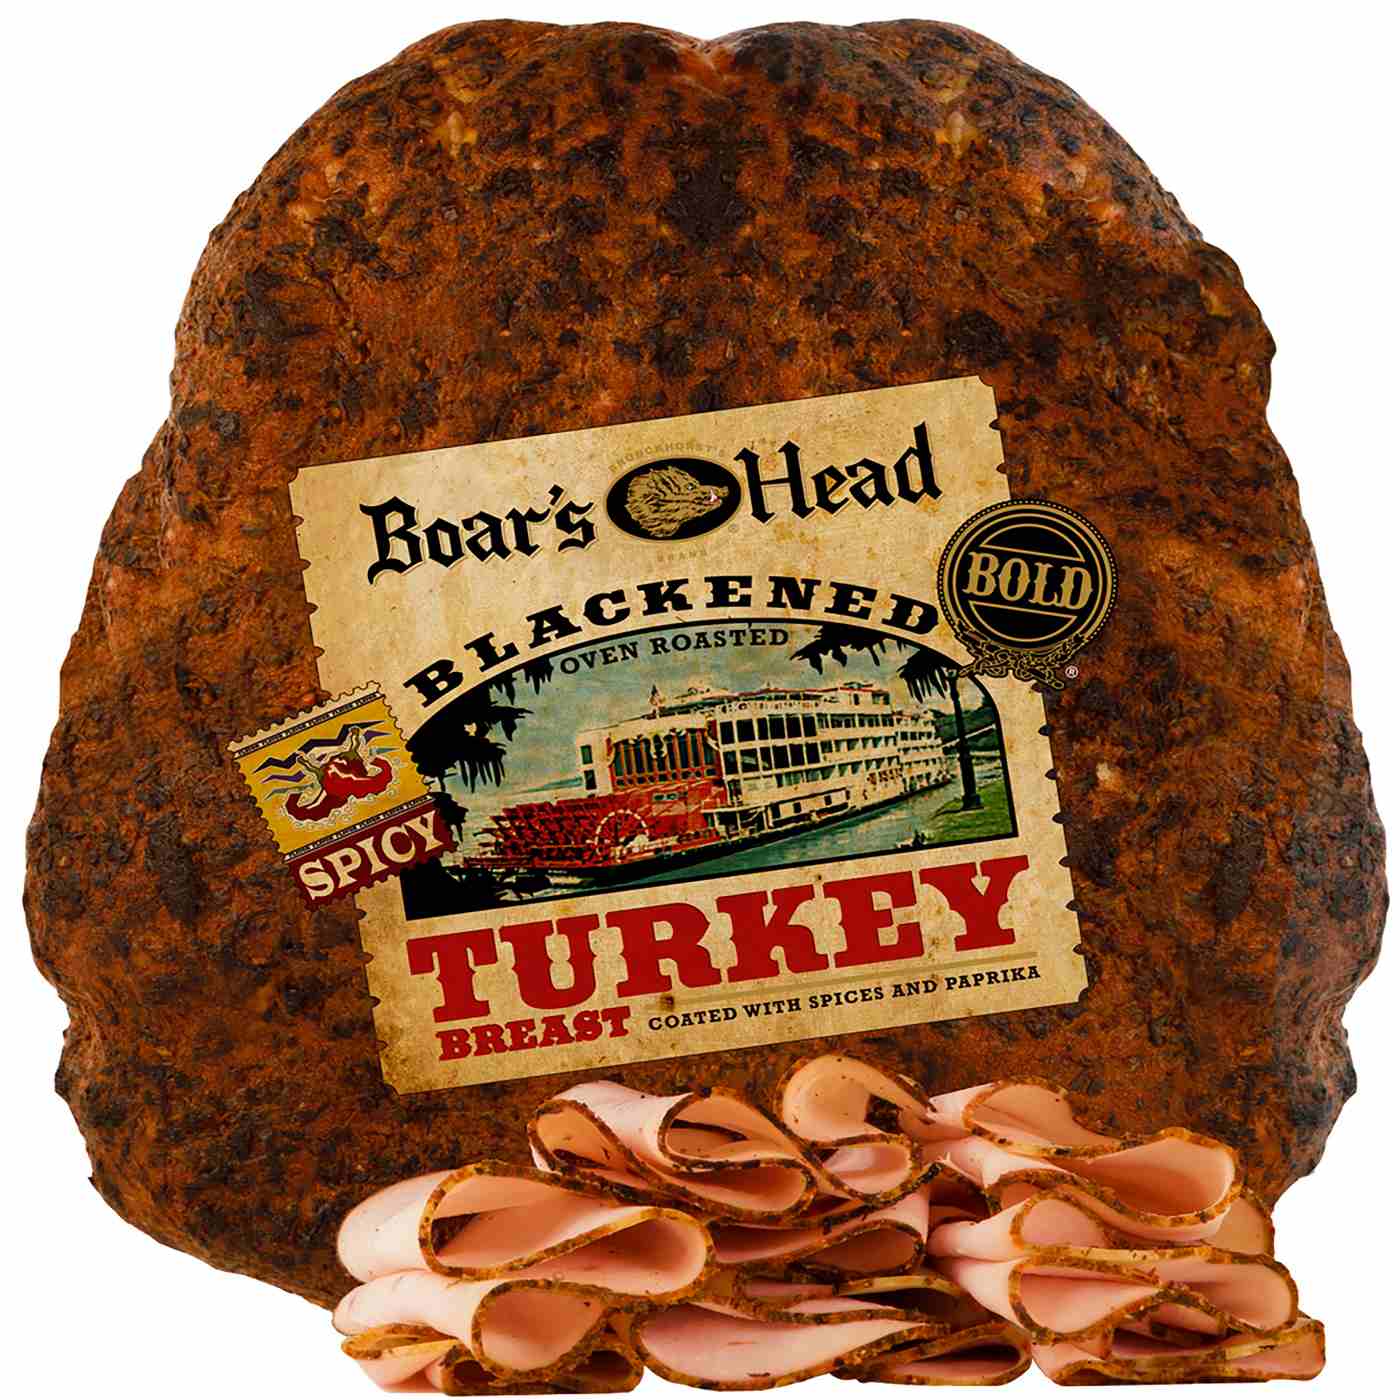 Boar's Head Bold Blackened Oven-Roasted Turkey Breast, Custom Sliced; image 2 of 2